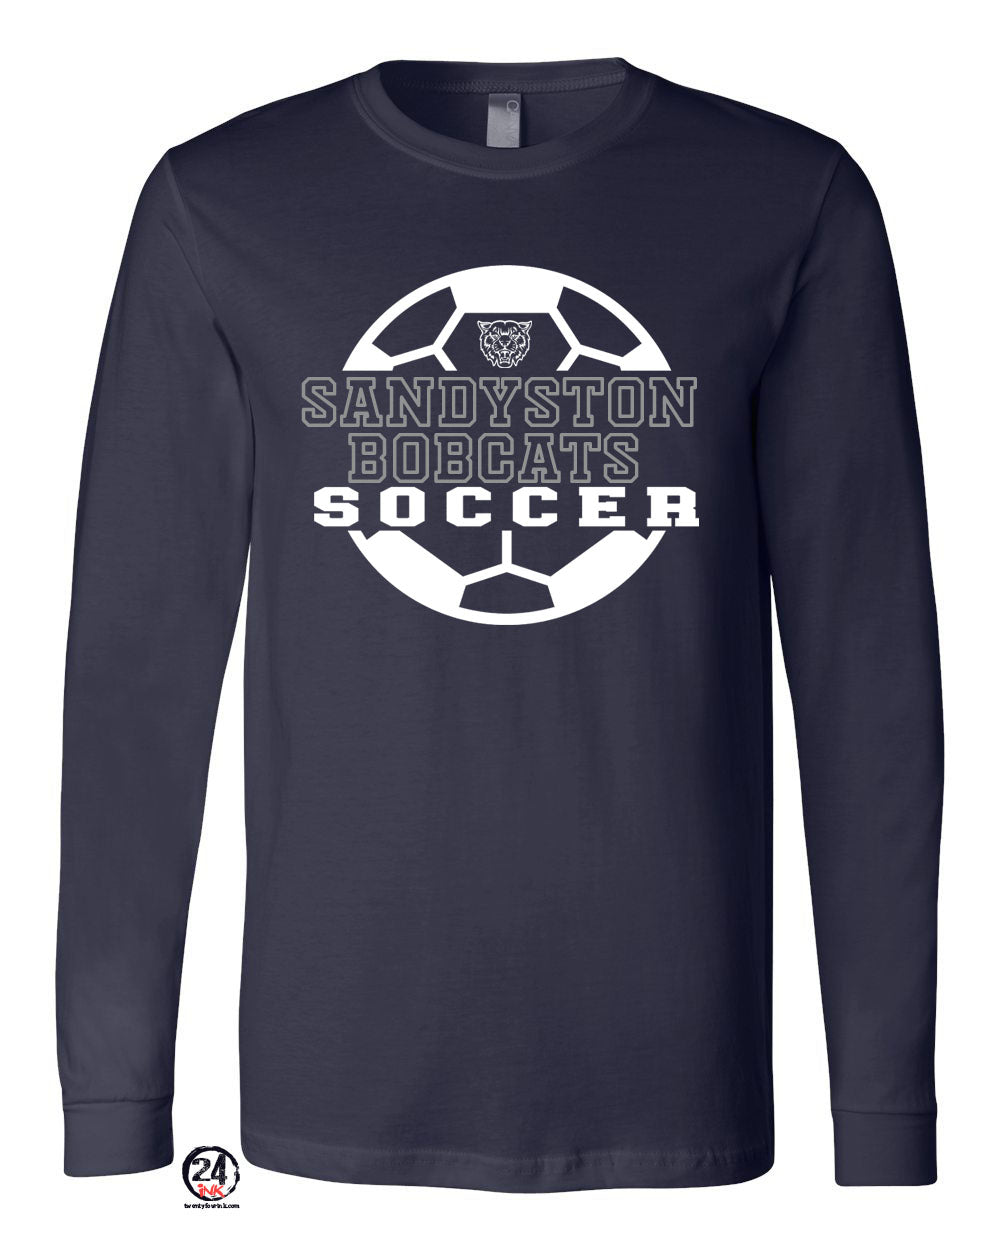 Sandyston Soccer Design 2 Long Sleeve Shirt